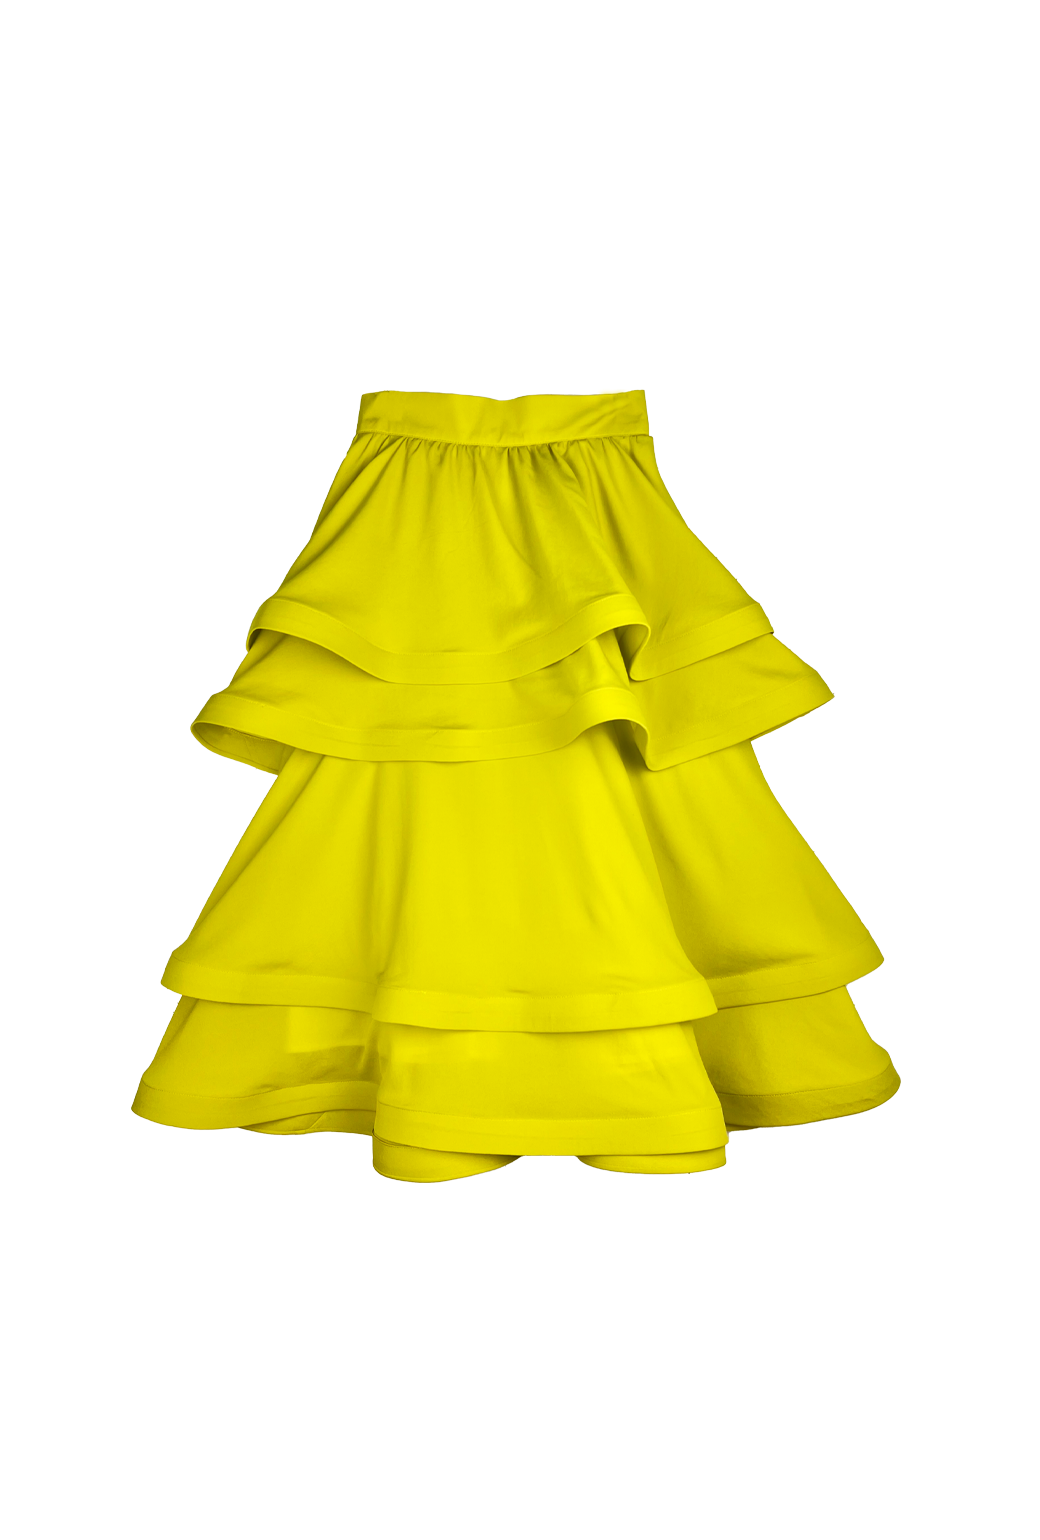 Big 10 Teagan Party Skirt - Chartreuse 2.0